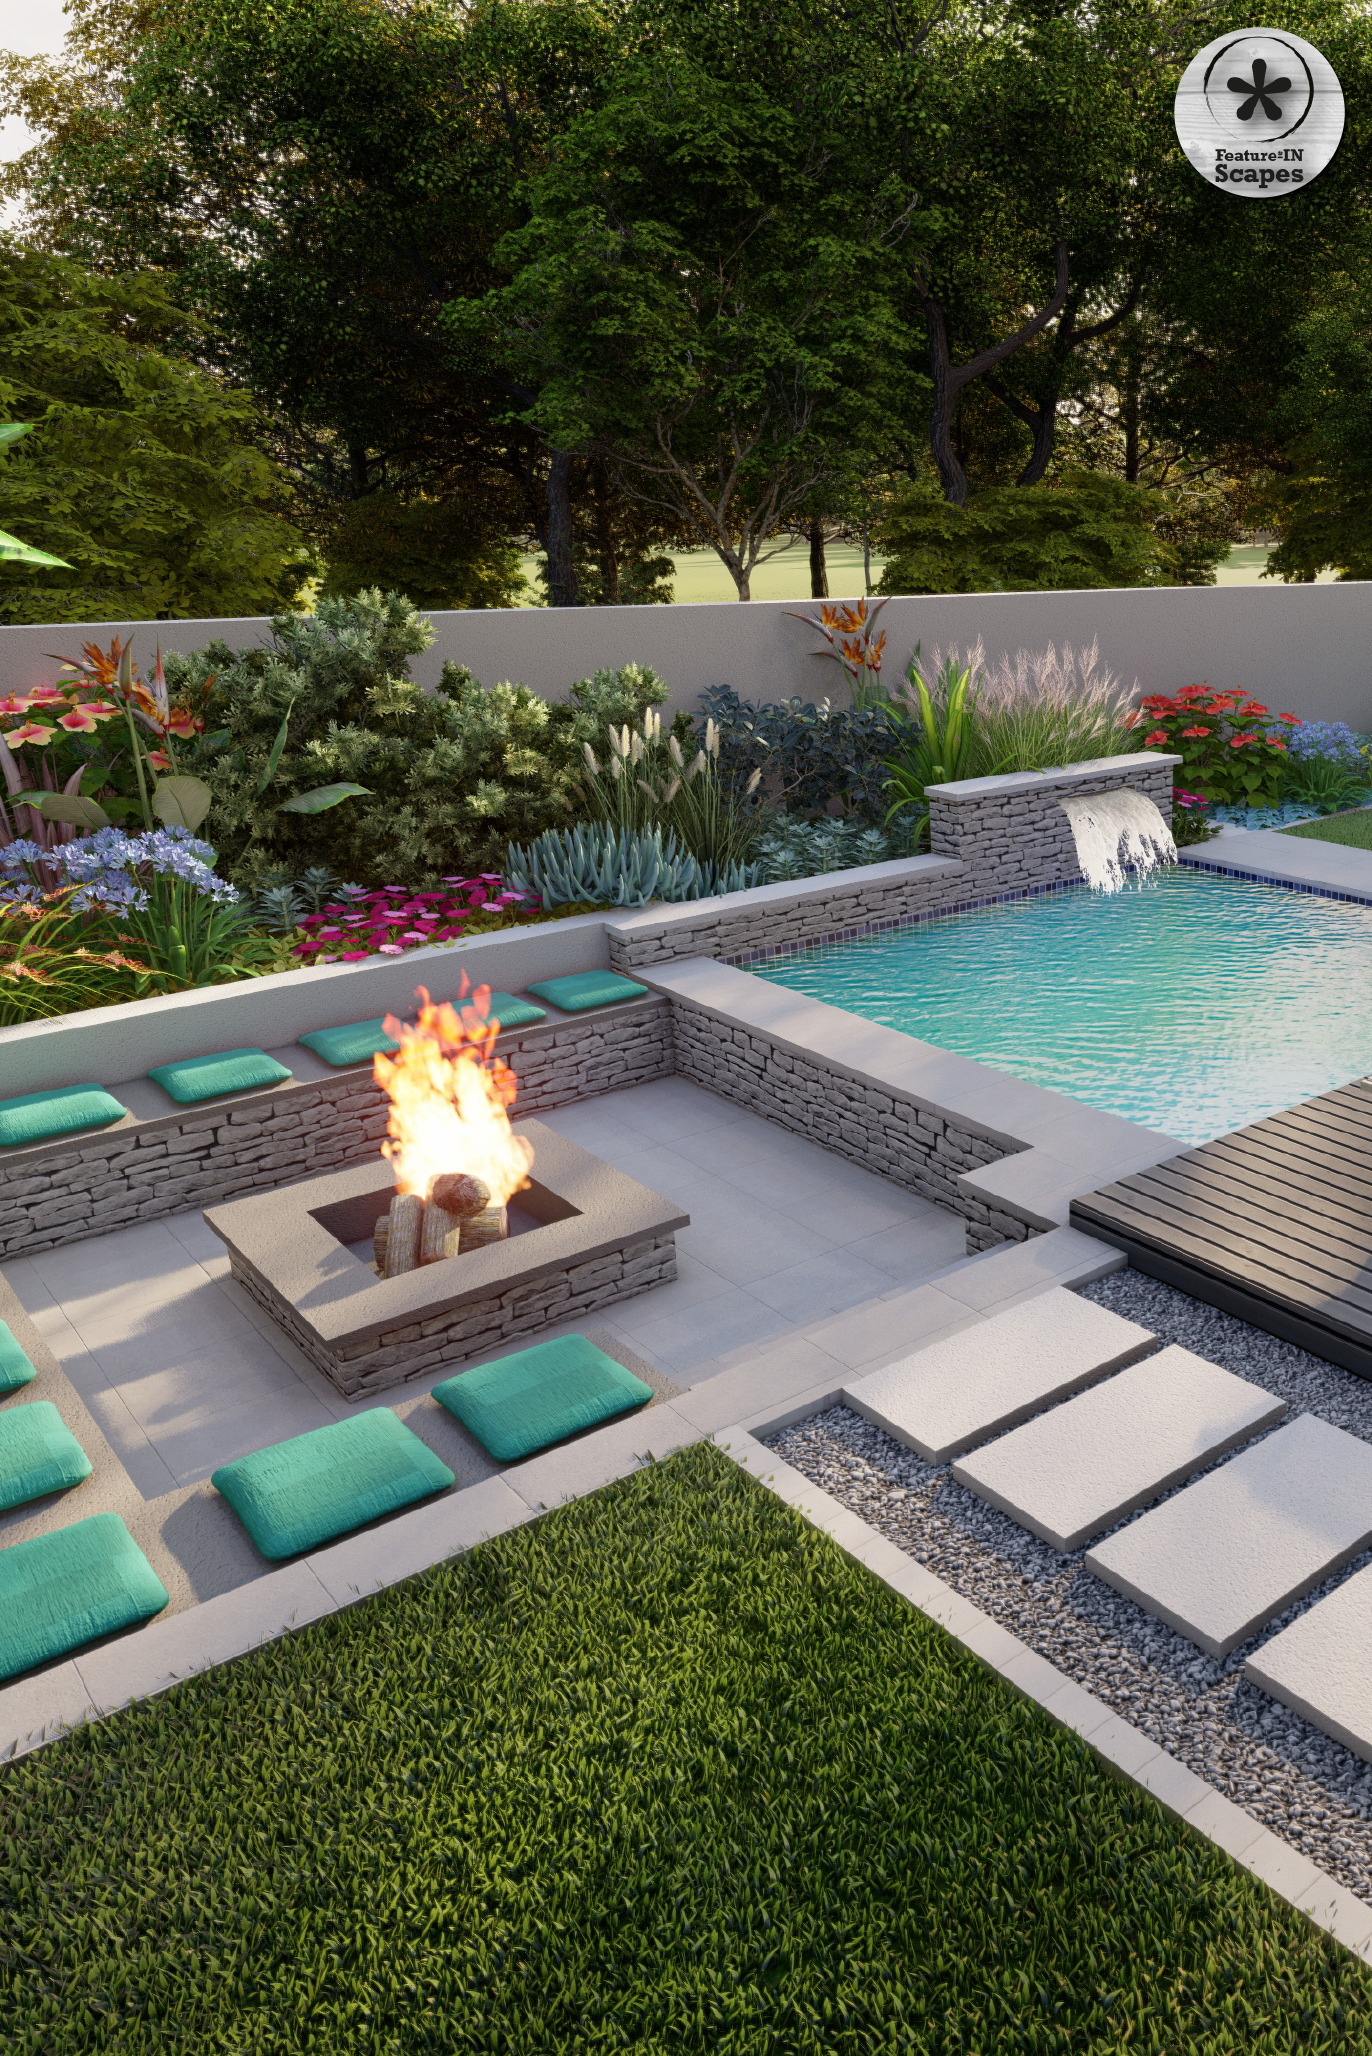 Transform Your Backyard: Creative Home
Swimming Pool Ideas